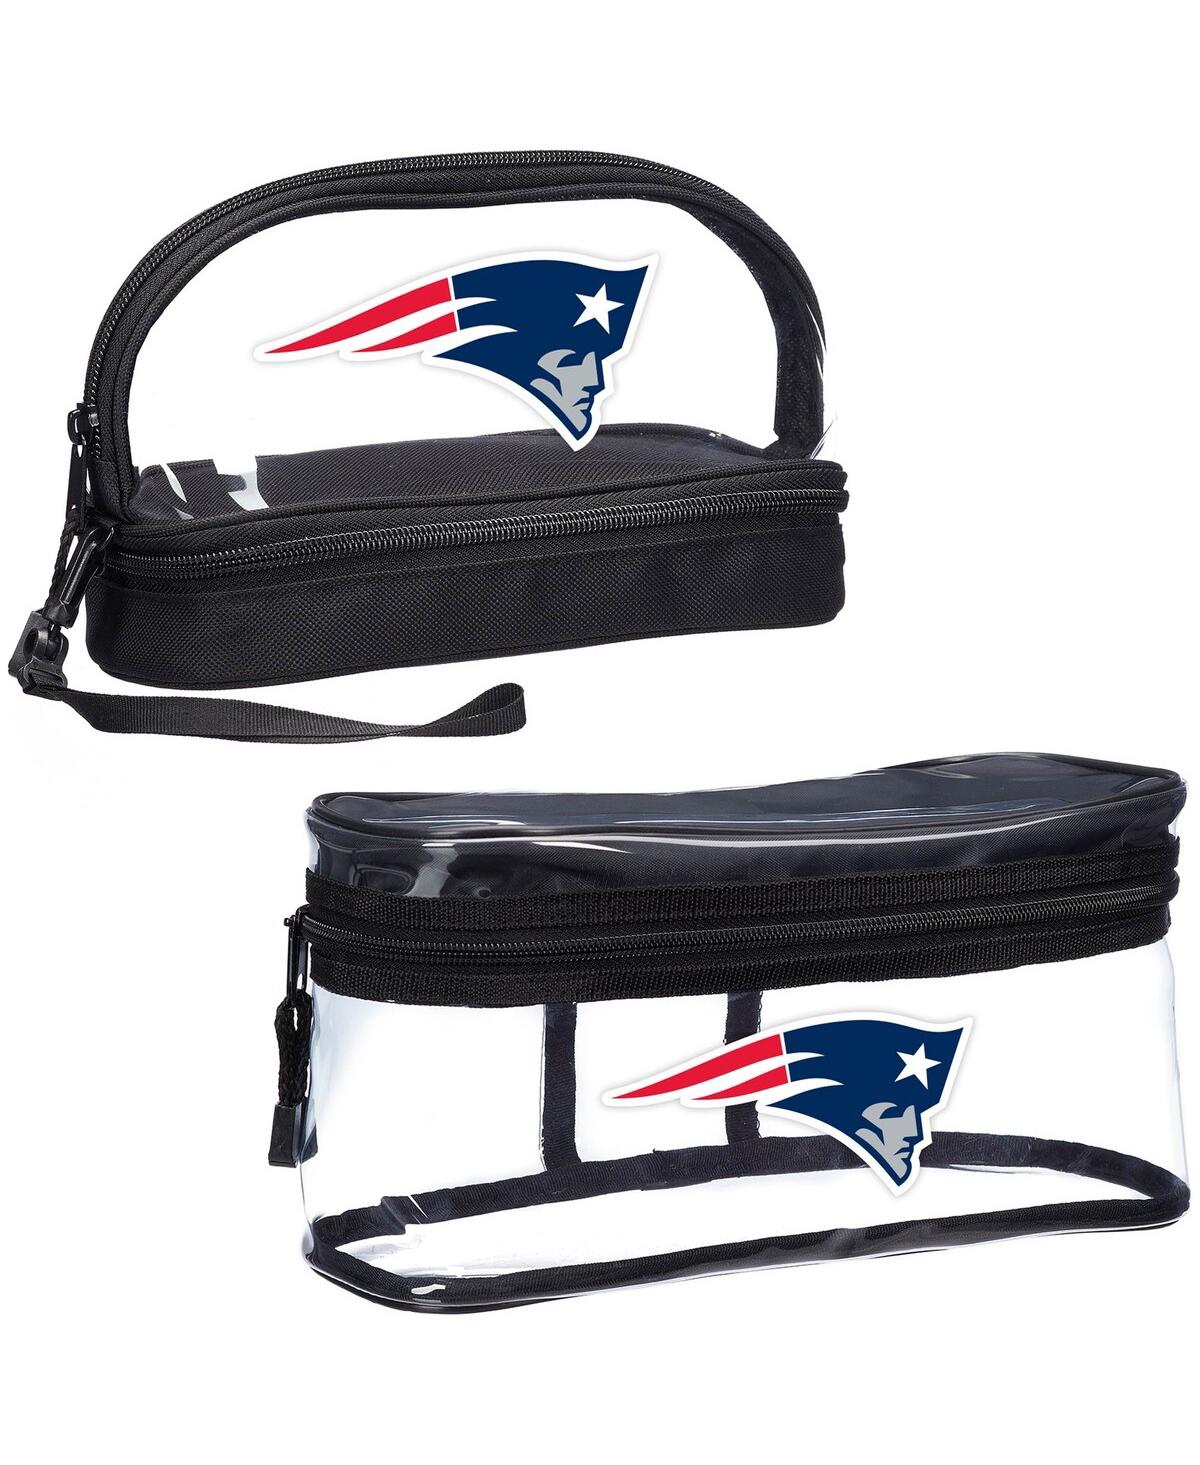 New England Patriots Two-Piece Travel Set - Black